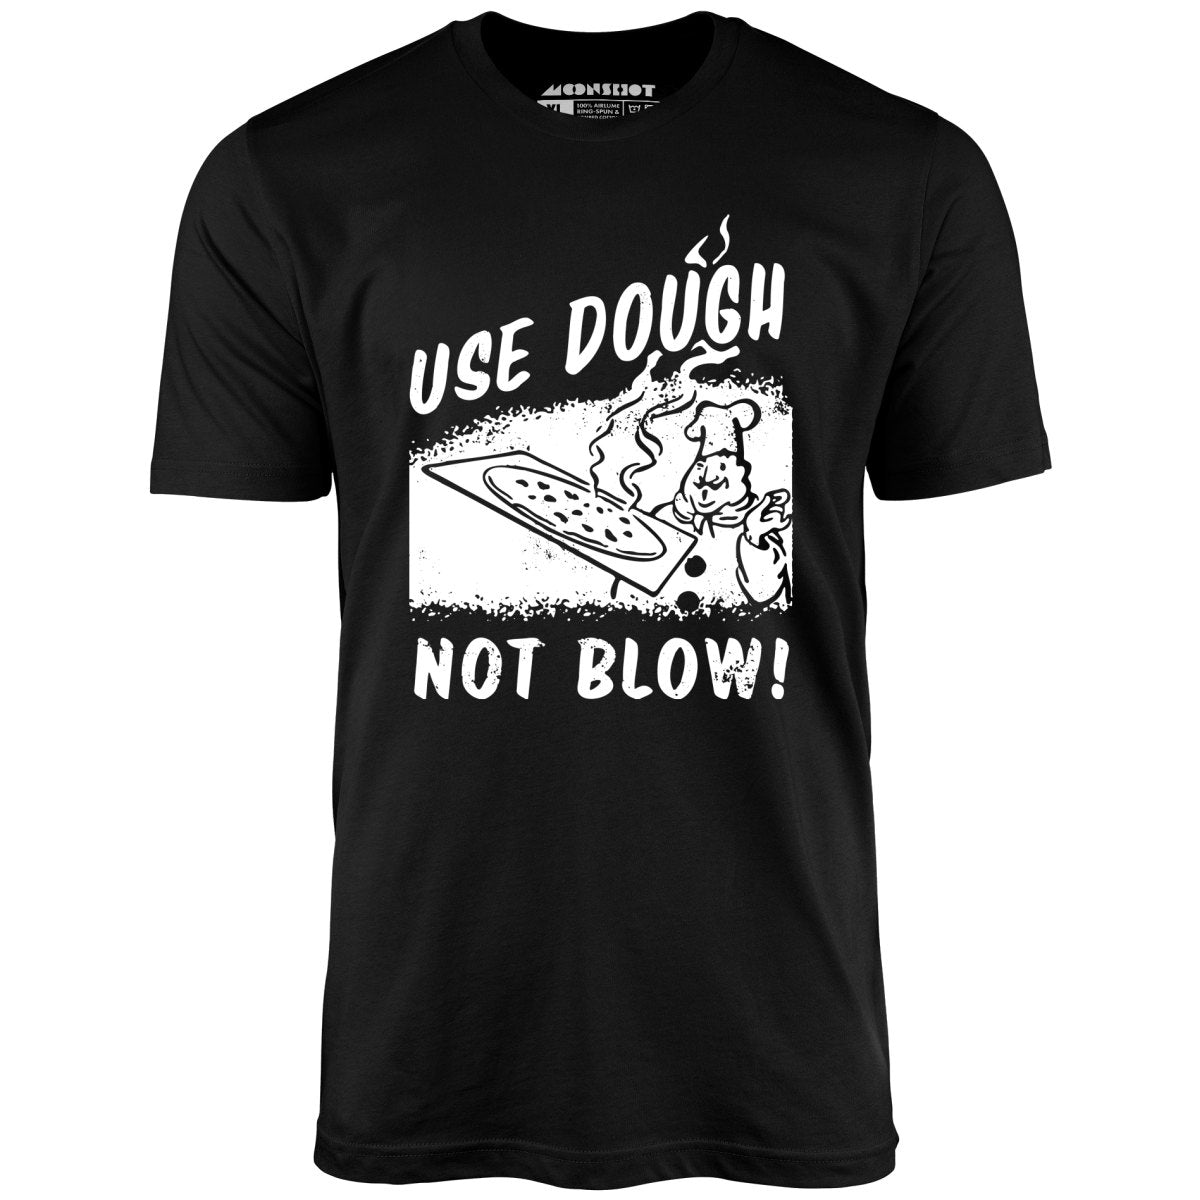 Use Dough Not Blow! - Unisex T-Shirt